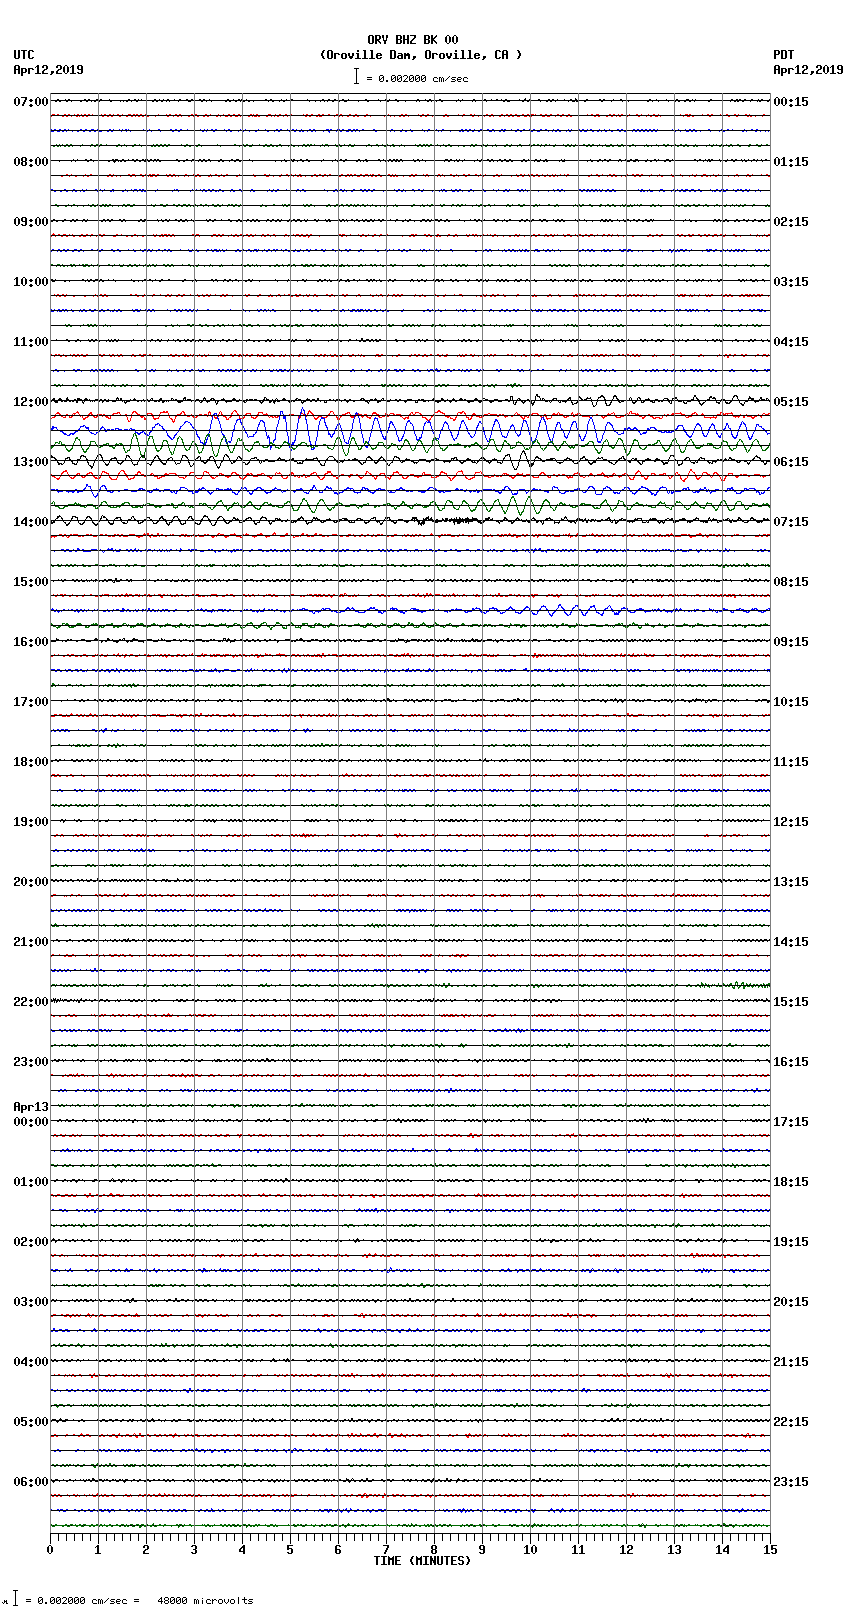 Seismograms | ORV BHZ BK 00 (Oroville Dam) - Fri Apr 12, 2019